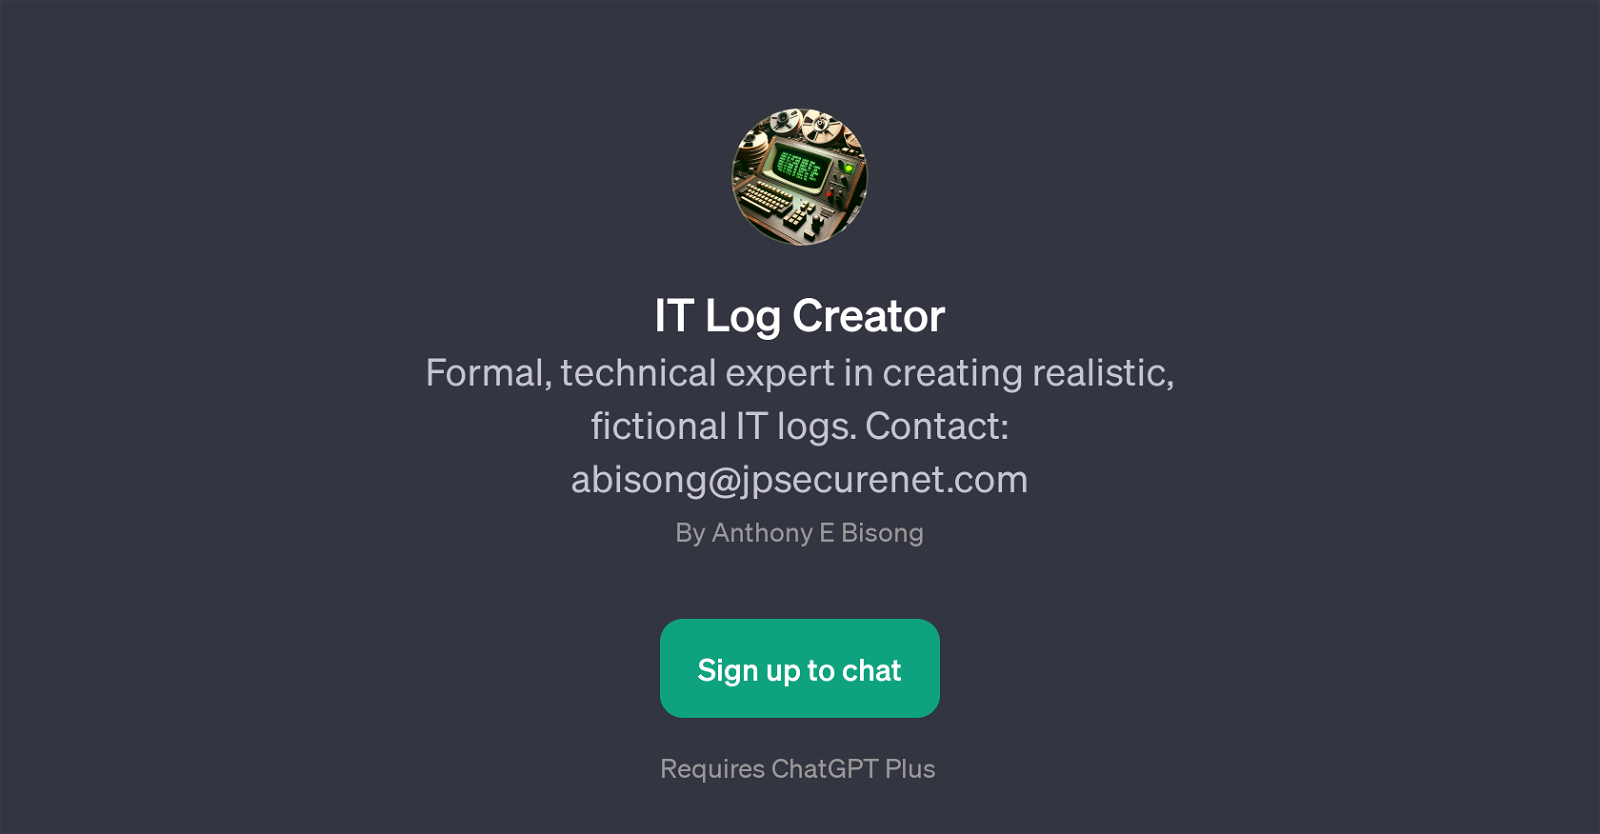 IT Log Creator website